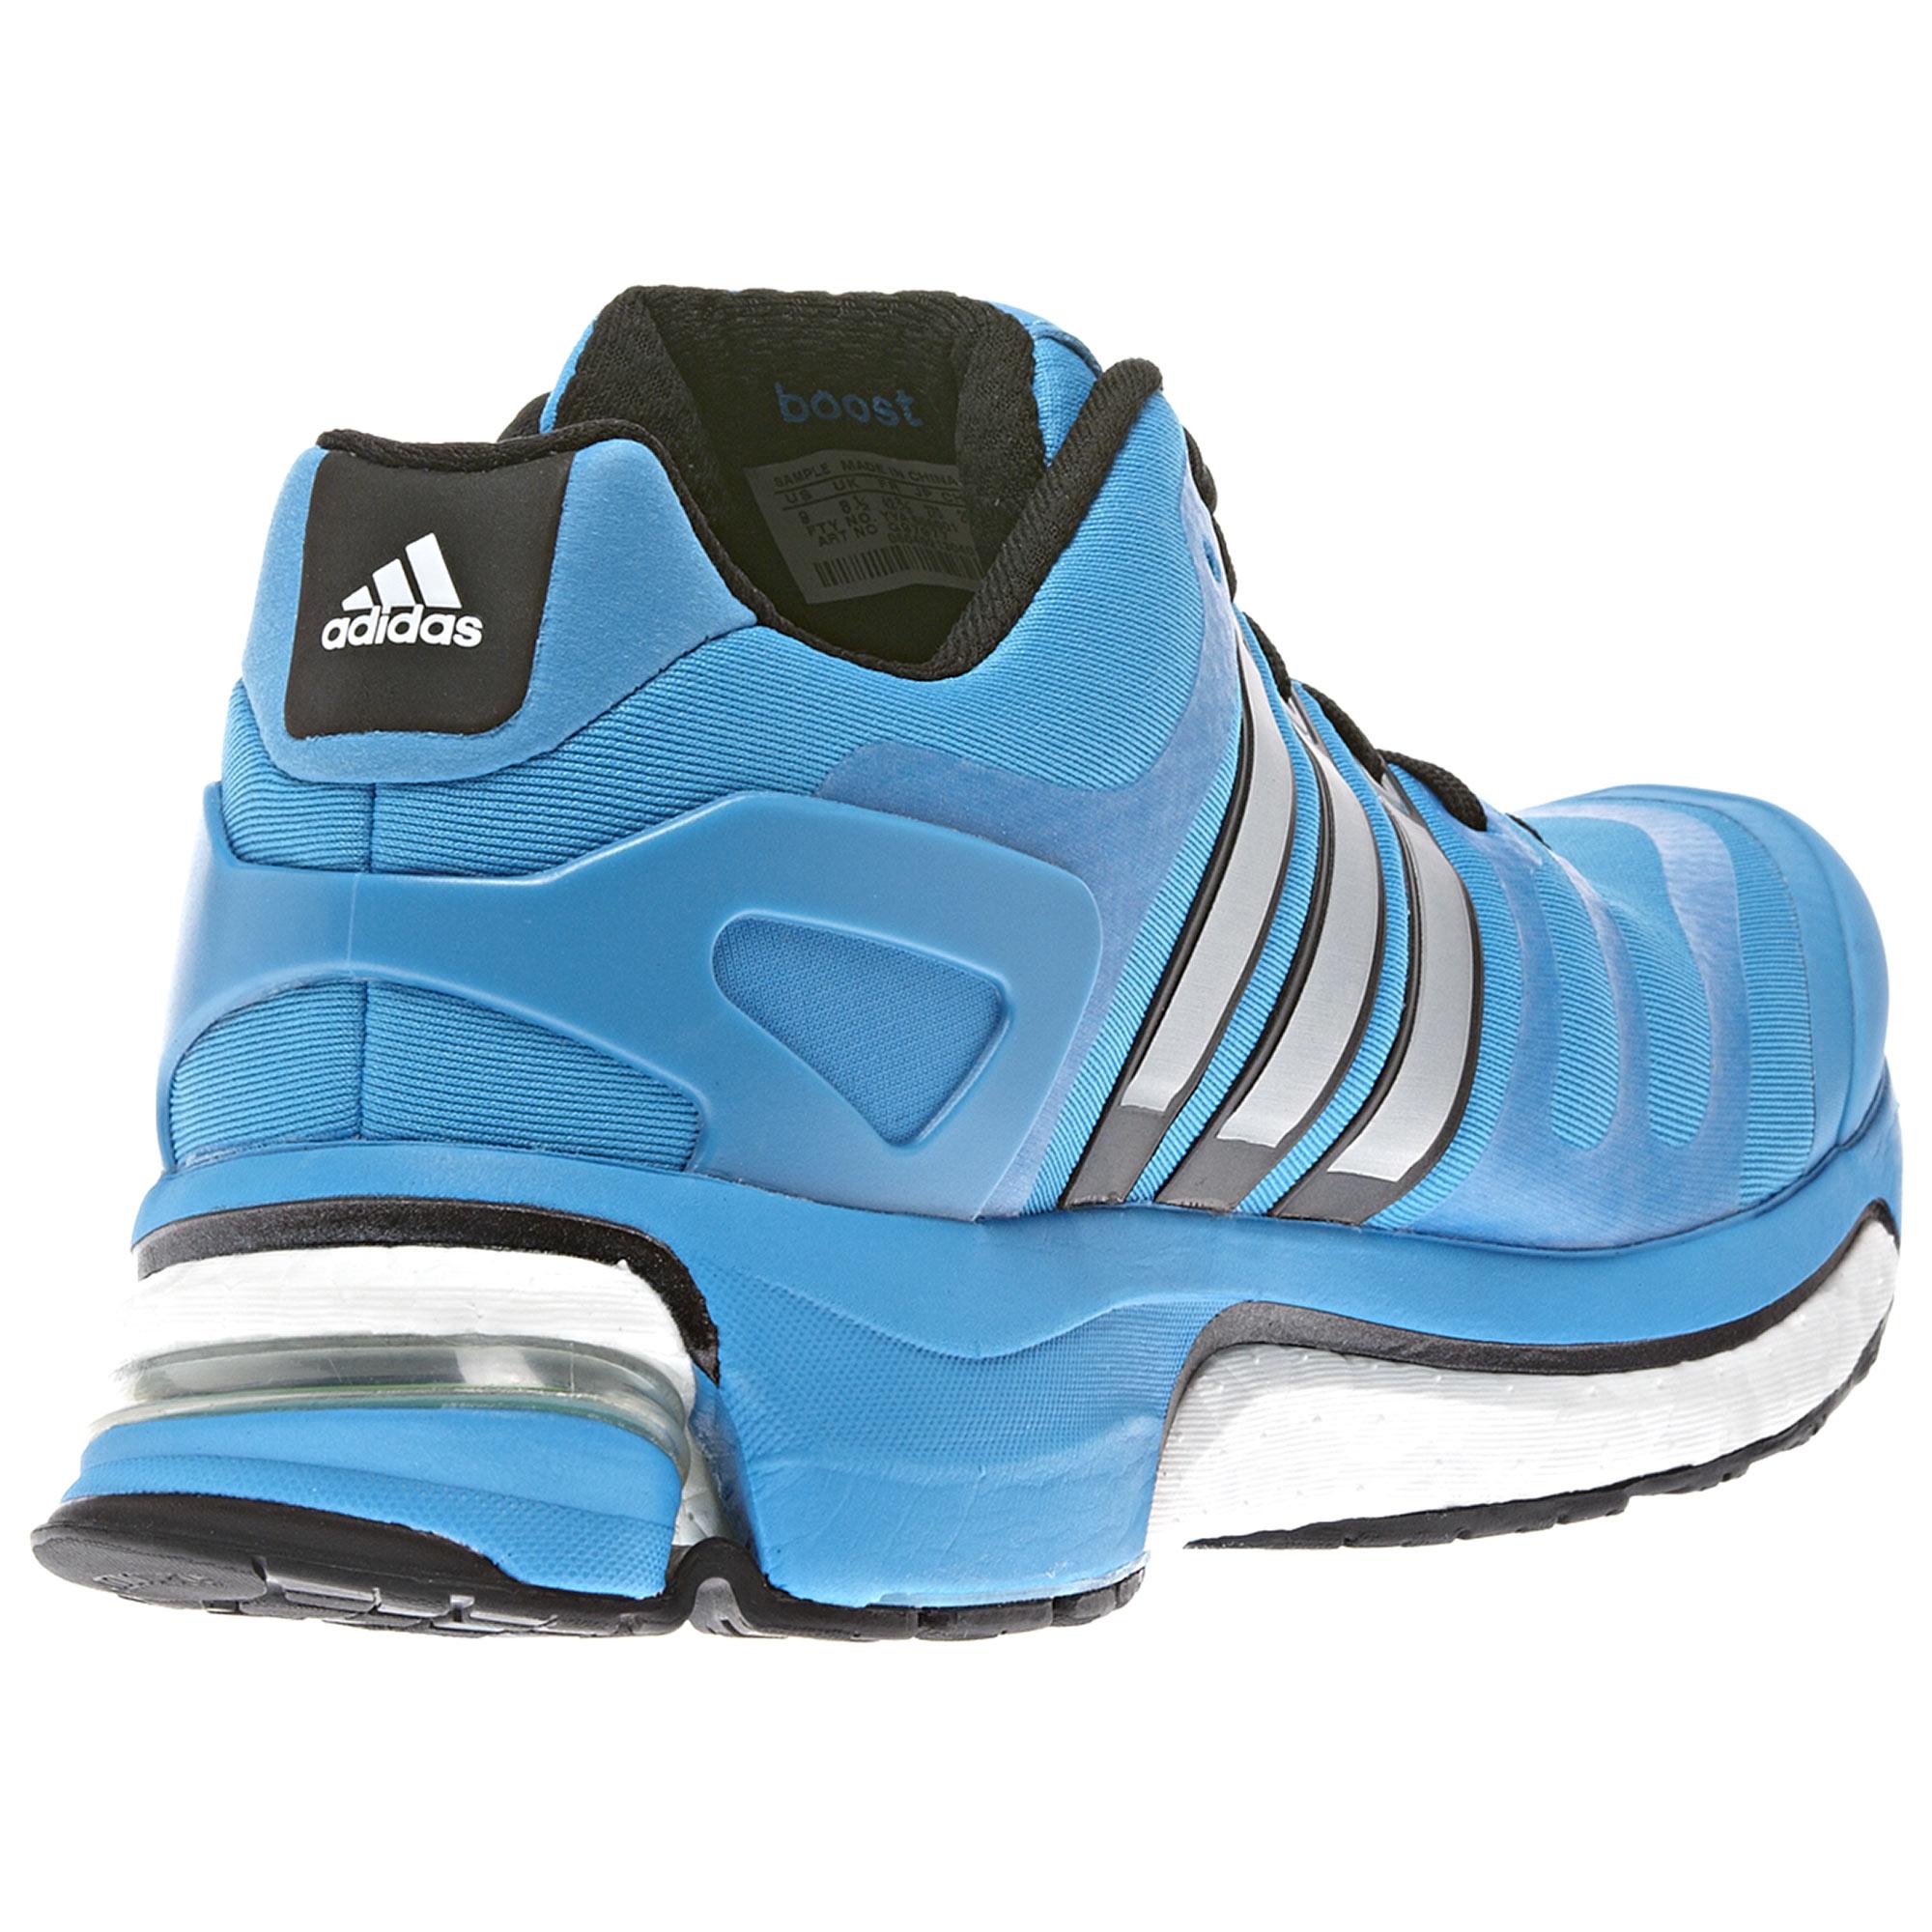 Adidas Mens Adistar Boost Running Shoes - Blue - Tennisnuts.com